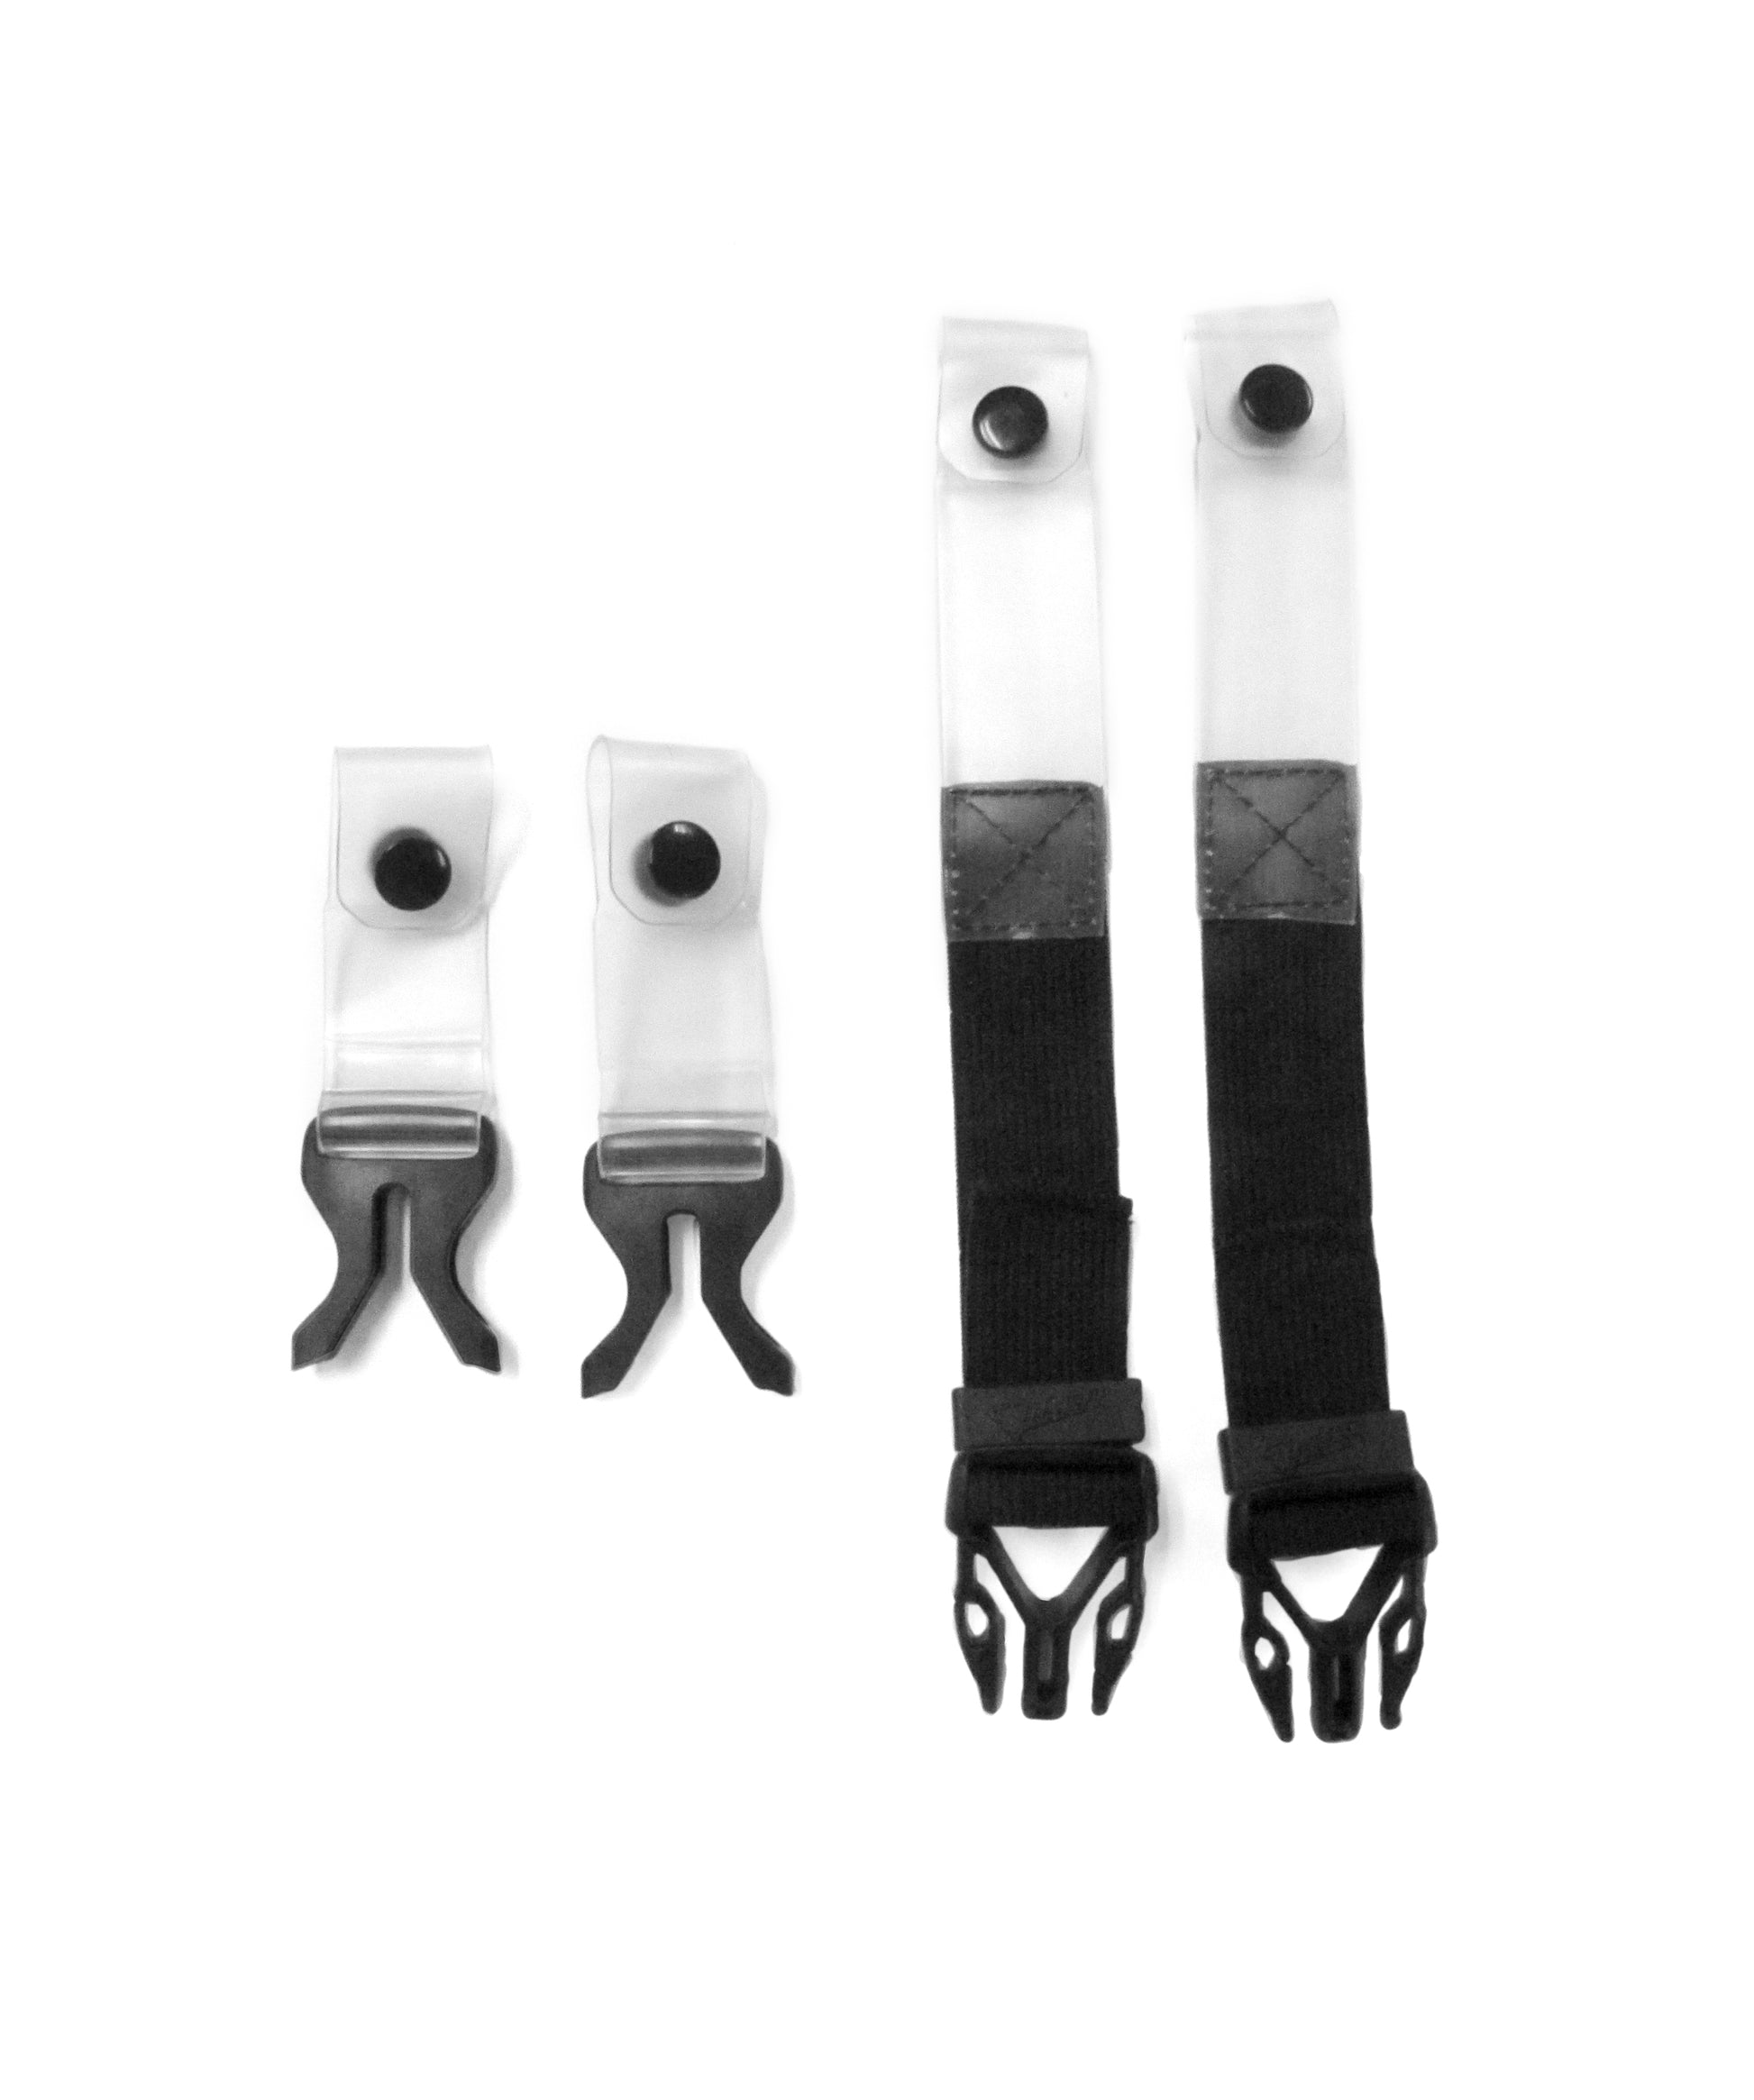 Leatt 3.5 Neck Brace, Accessories / Pads & Protection